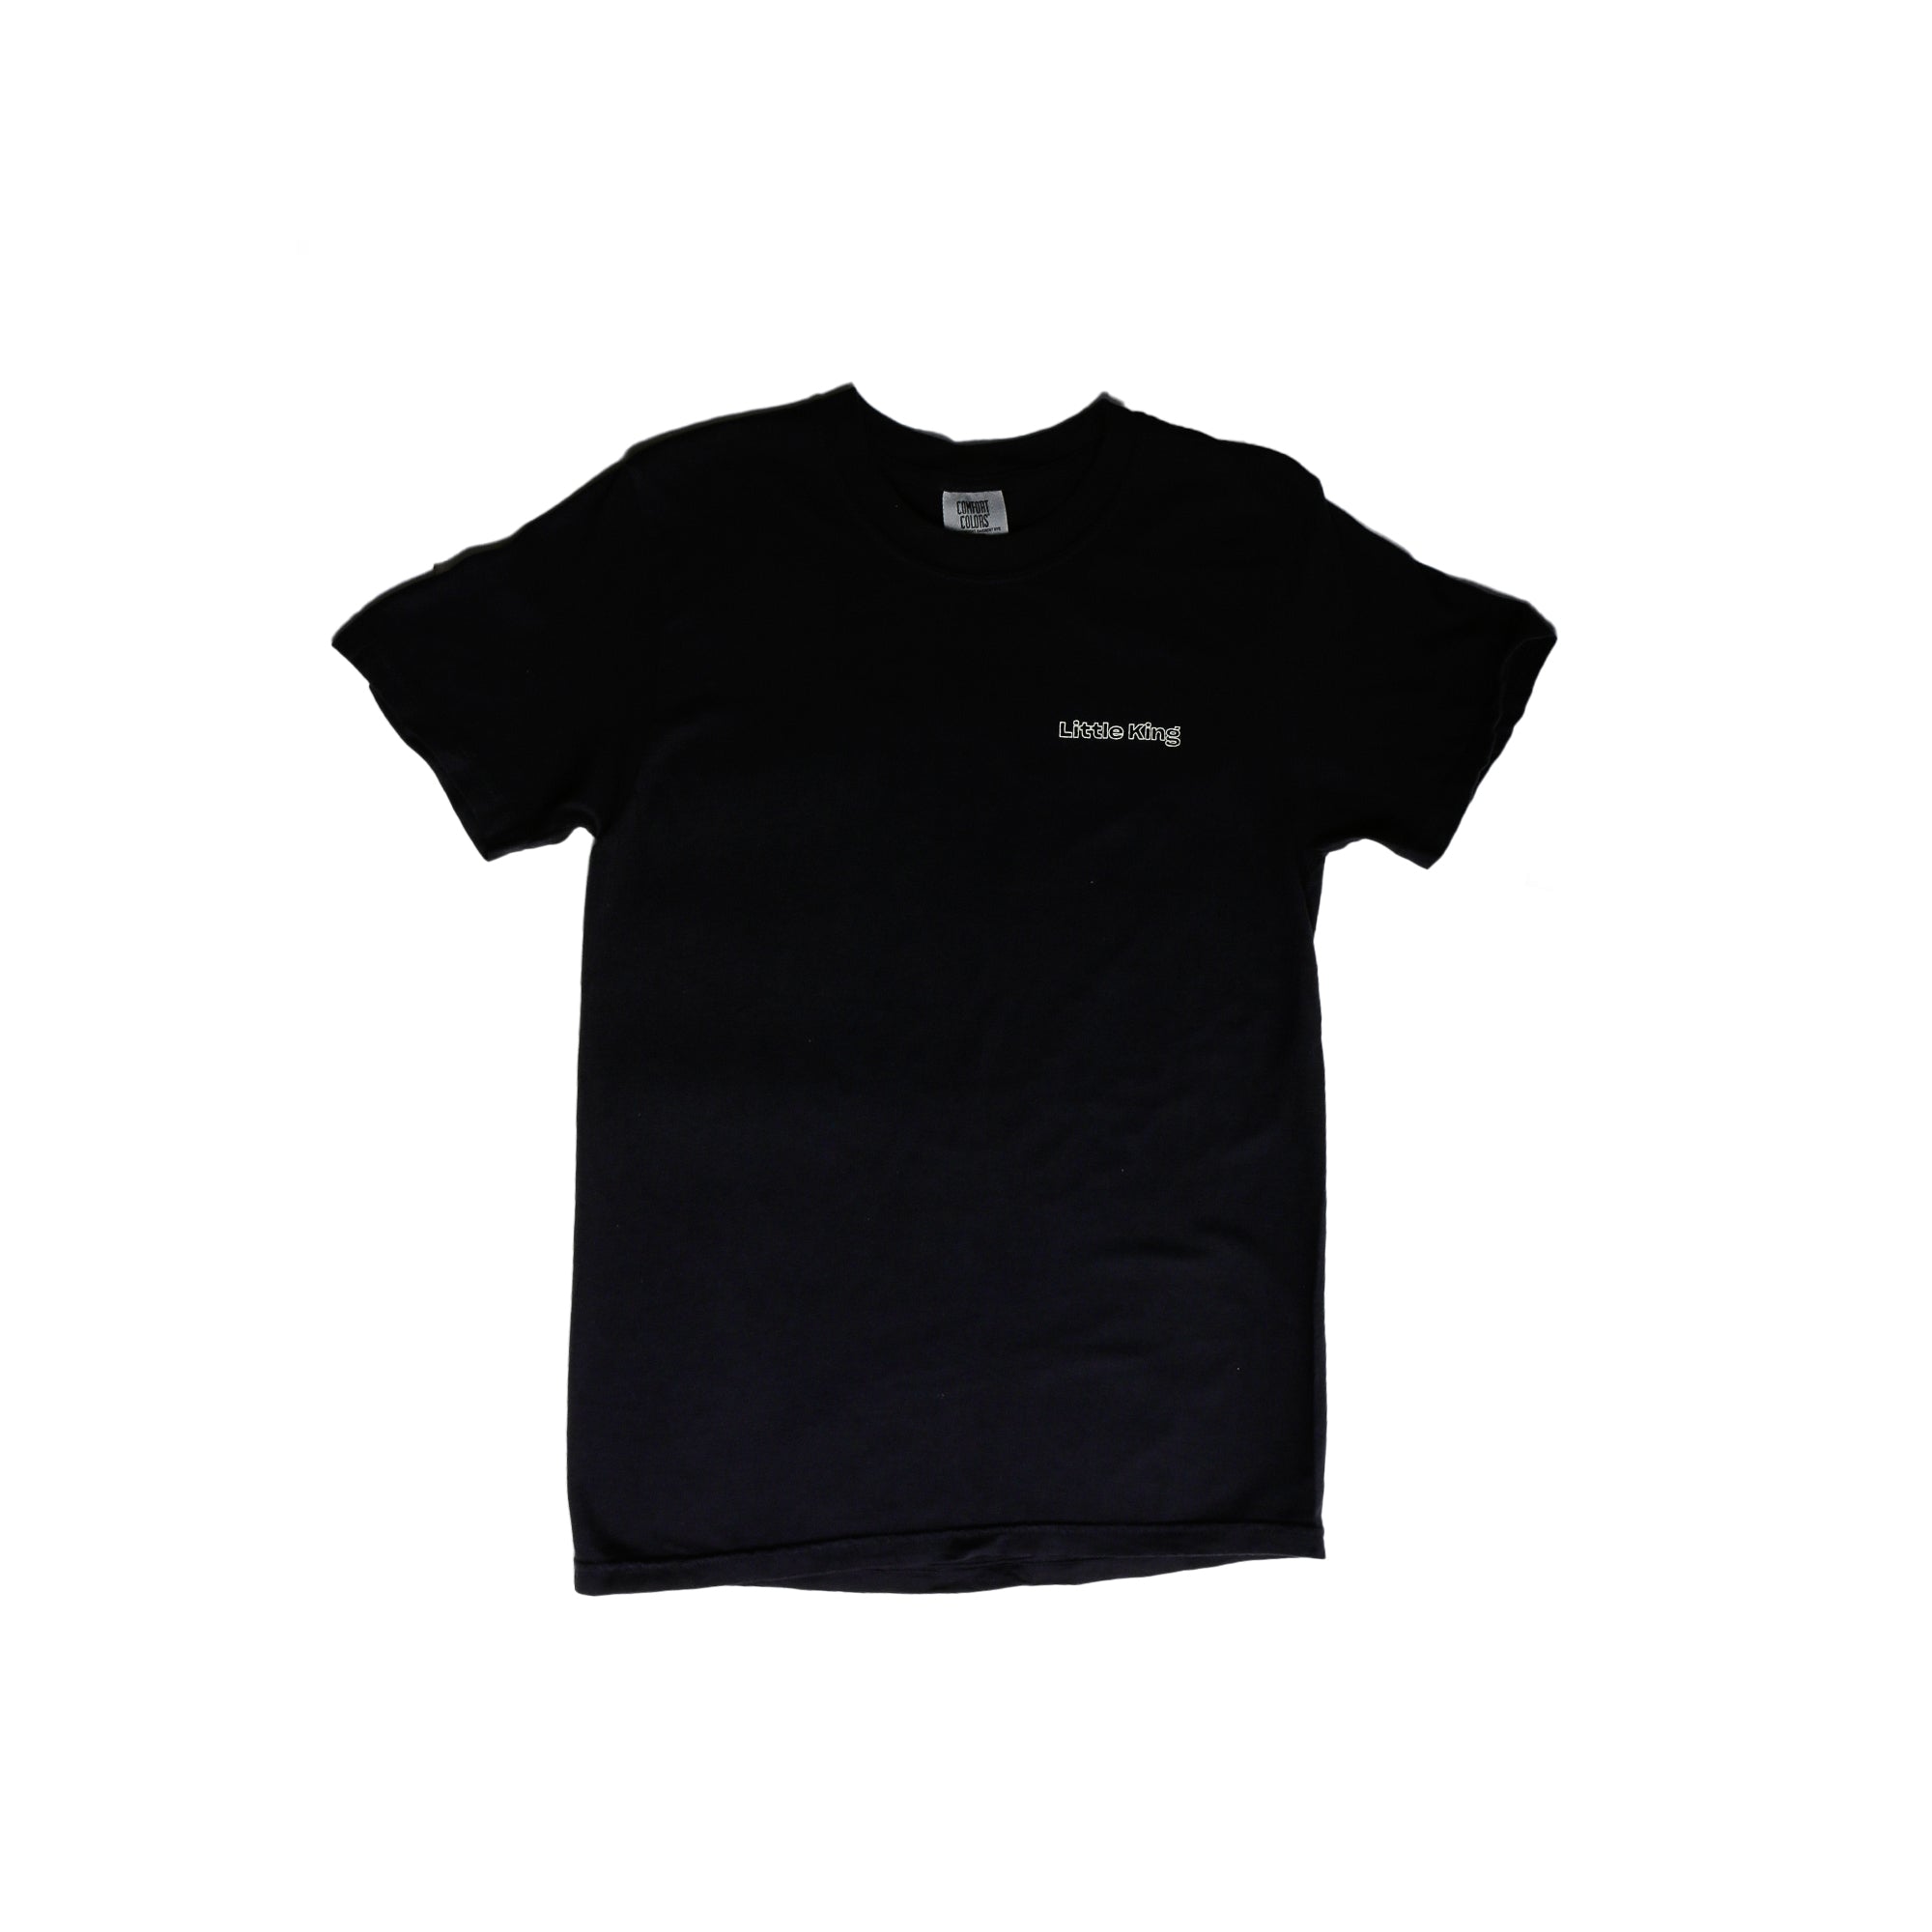 Sakari x Little King T-Shirt, Black / Cream